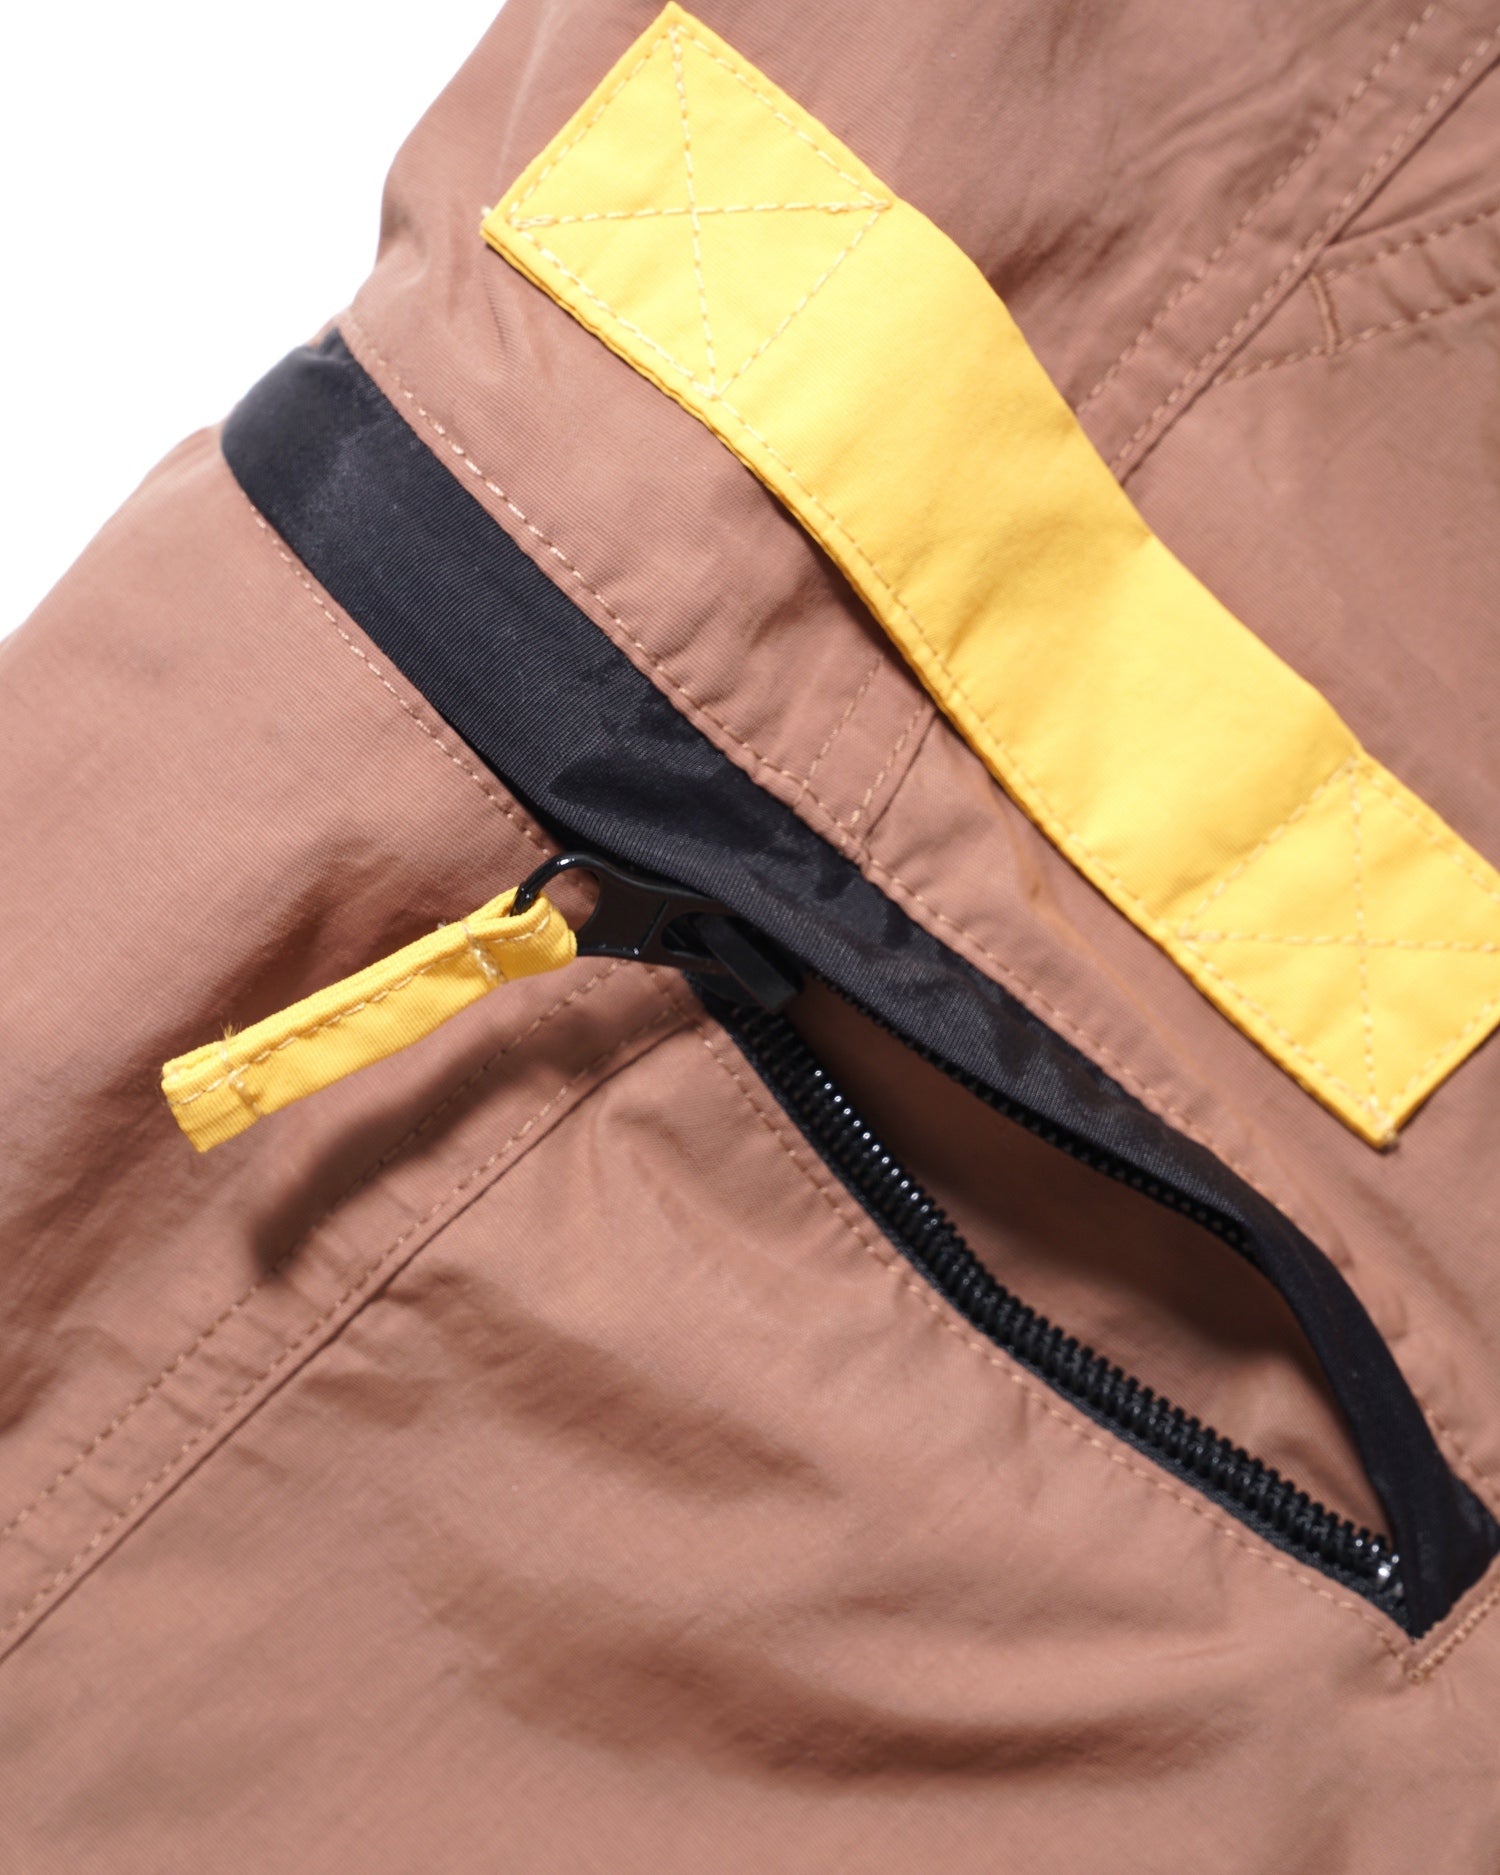 Terrain Cargo Pants, Washed Wood / Orange